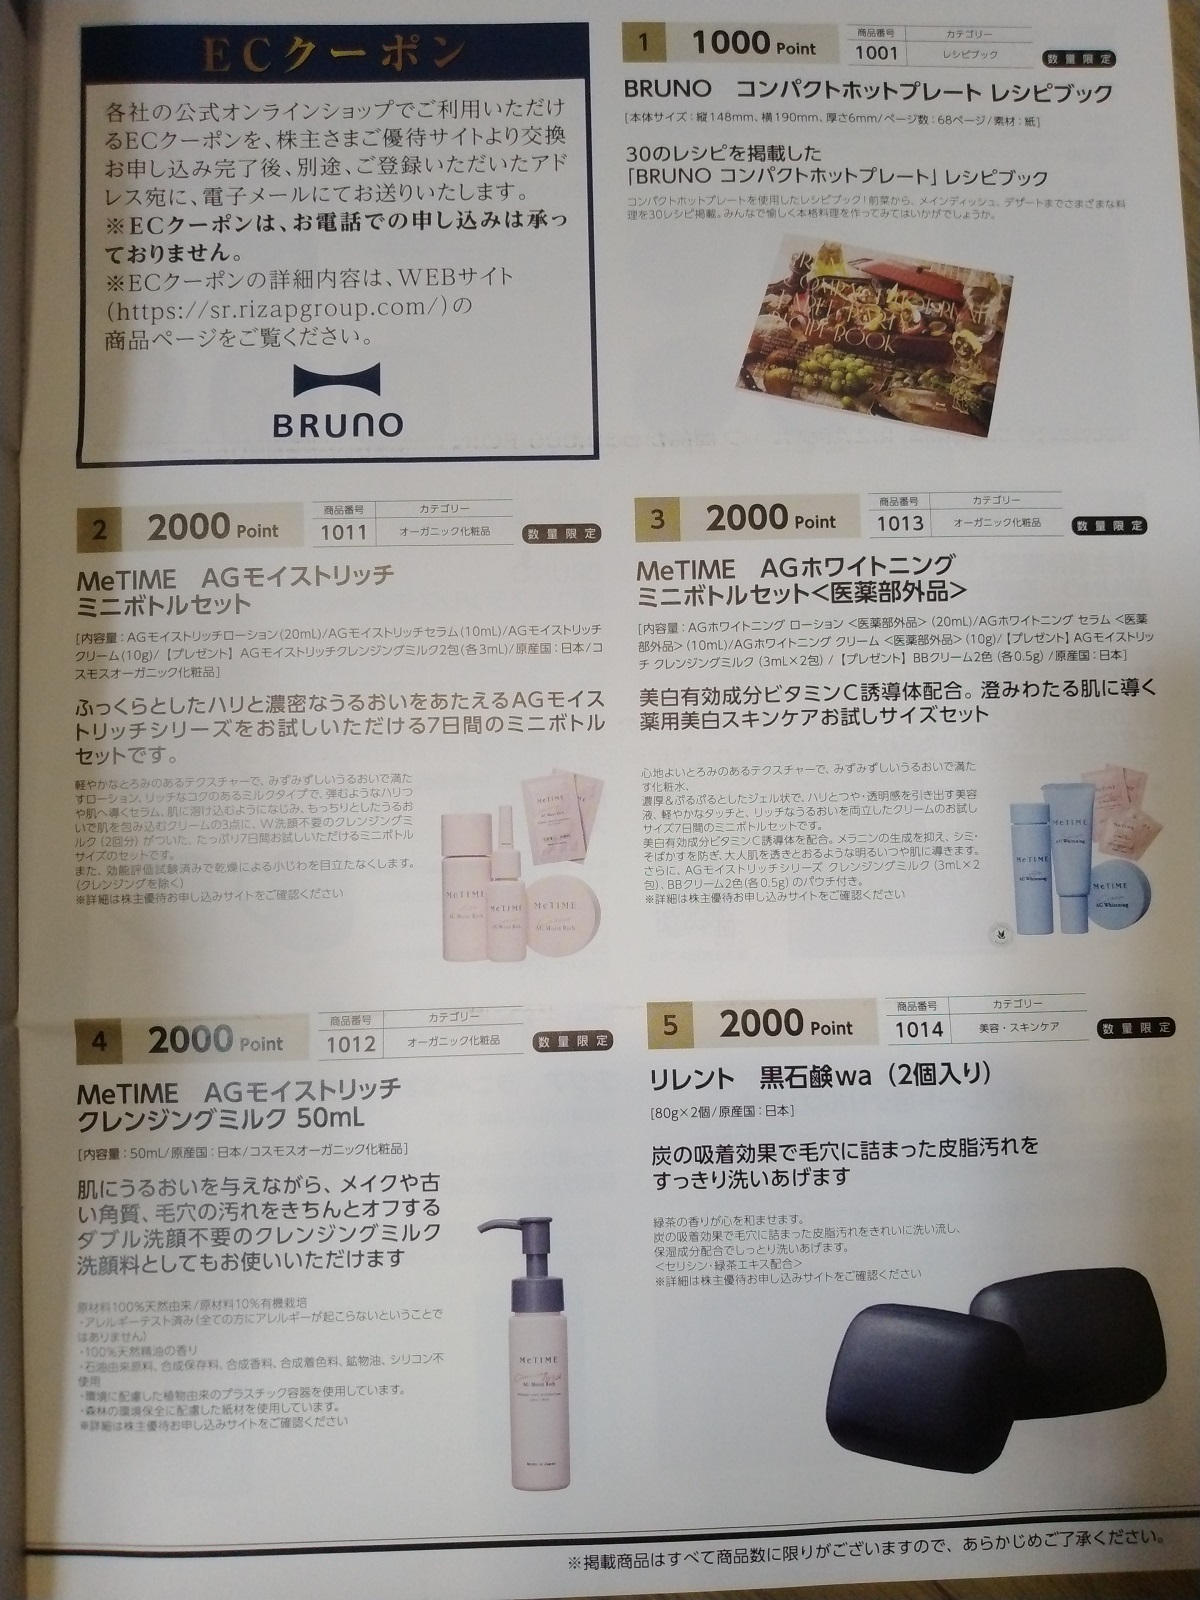 BRUNO(3140)【株主優待】ホットプレートなどが選べるカタログが